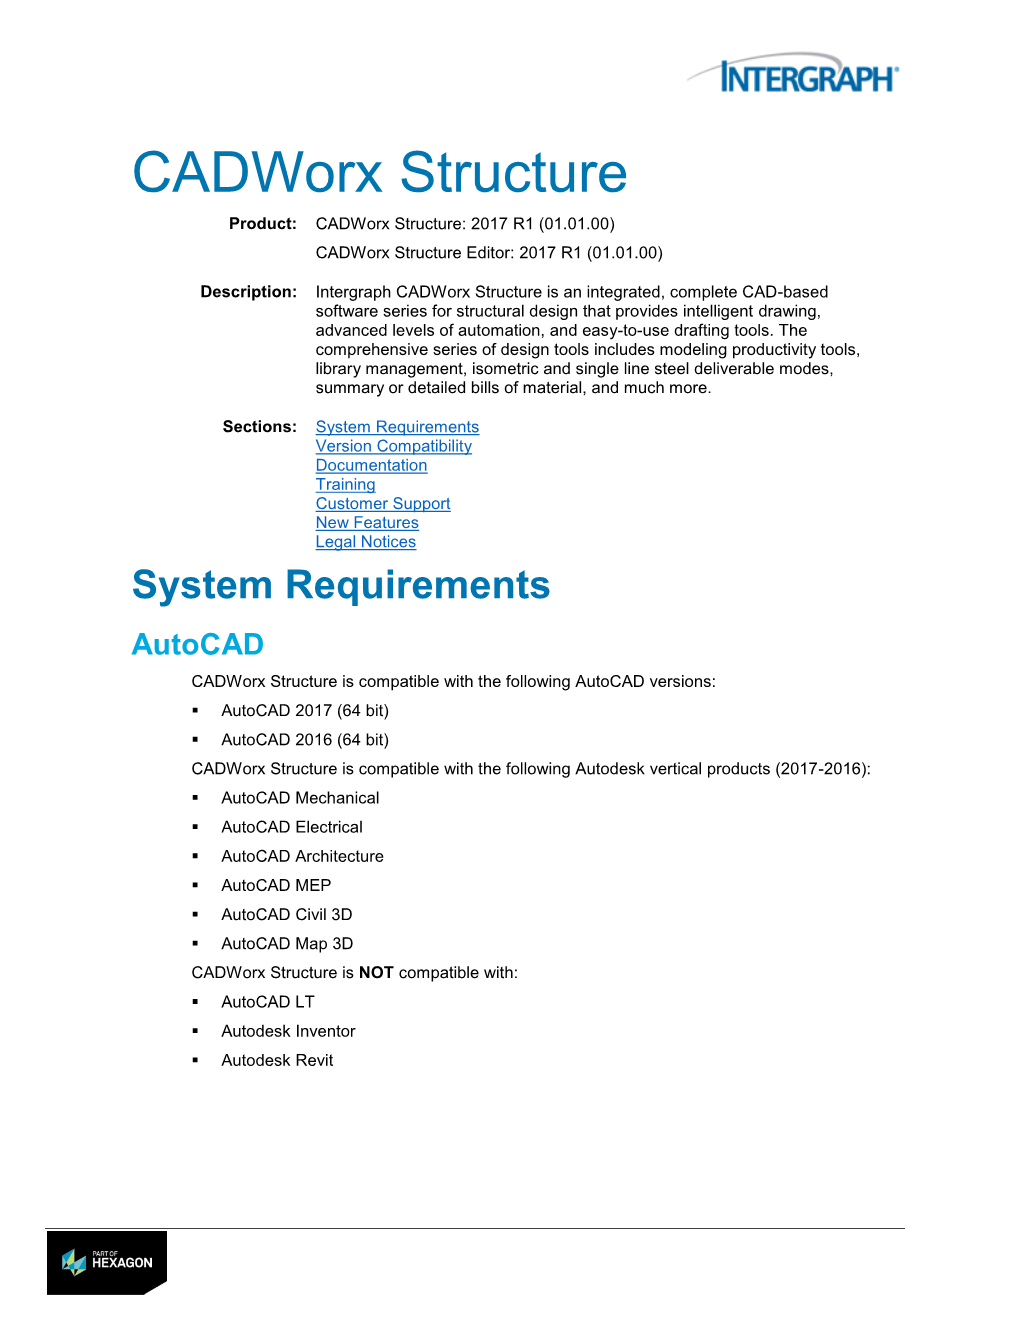 Cadworx Structure Product: Cadworx Structure: 2017 R1 (01.01.00) Cadworx Structure Editor: 2017 R1 (01.01.00)